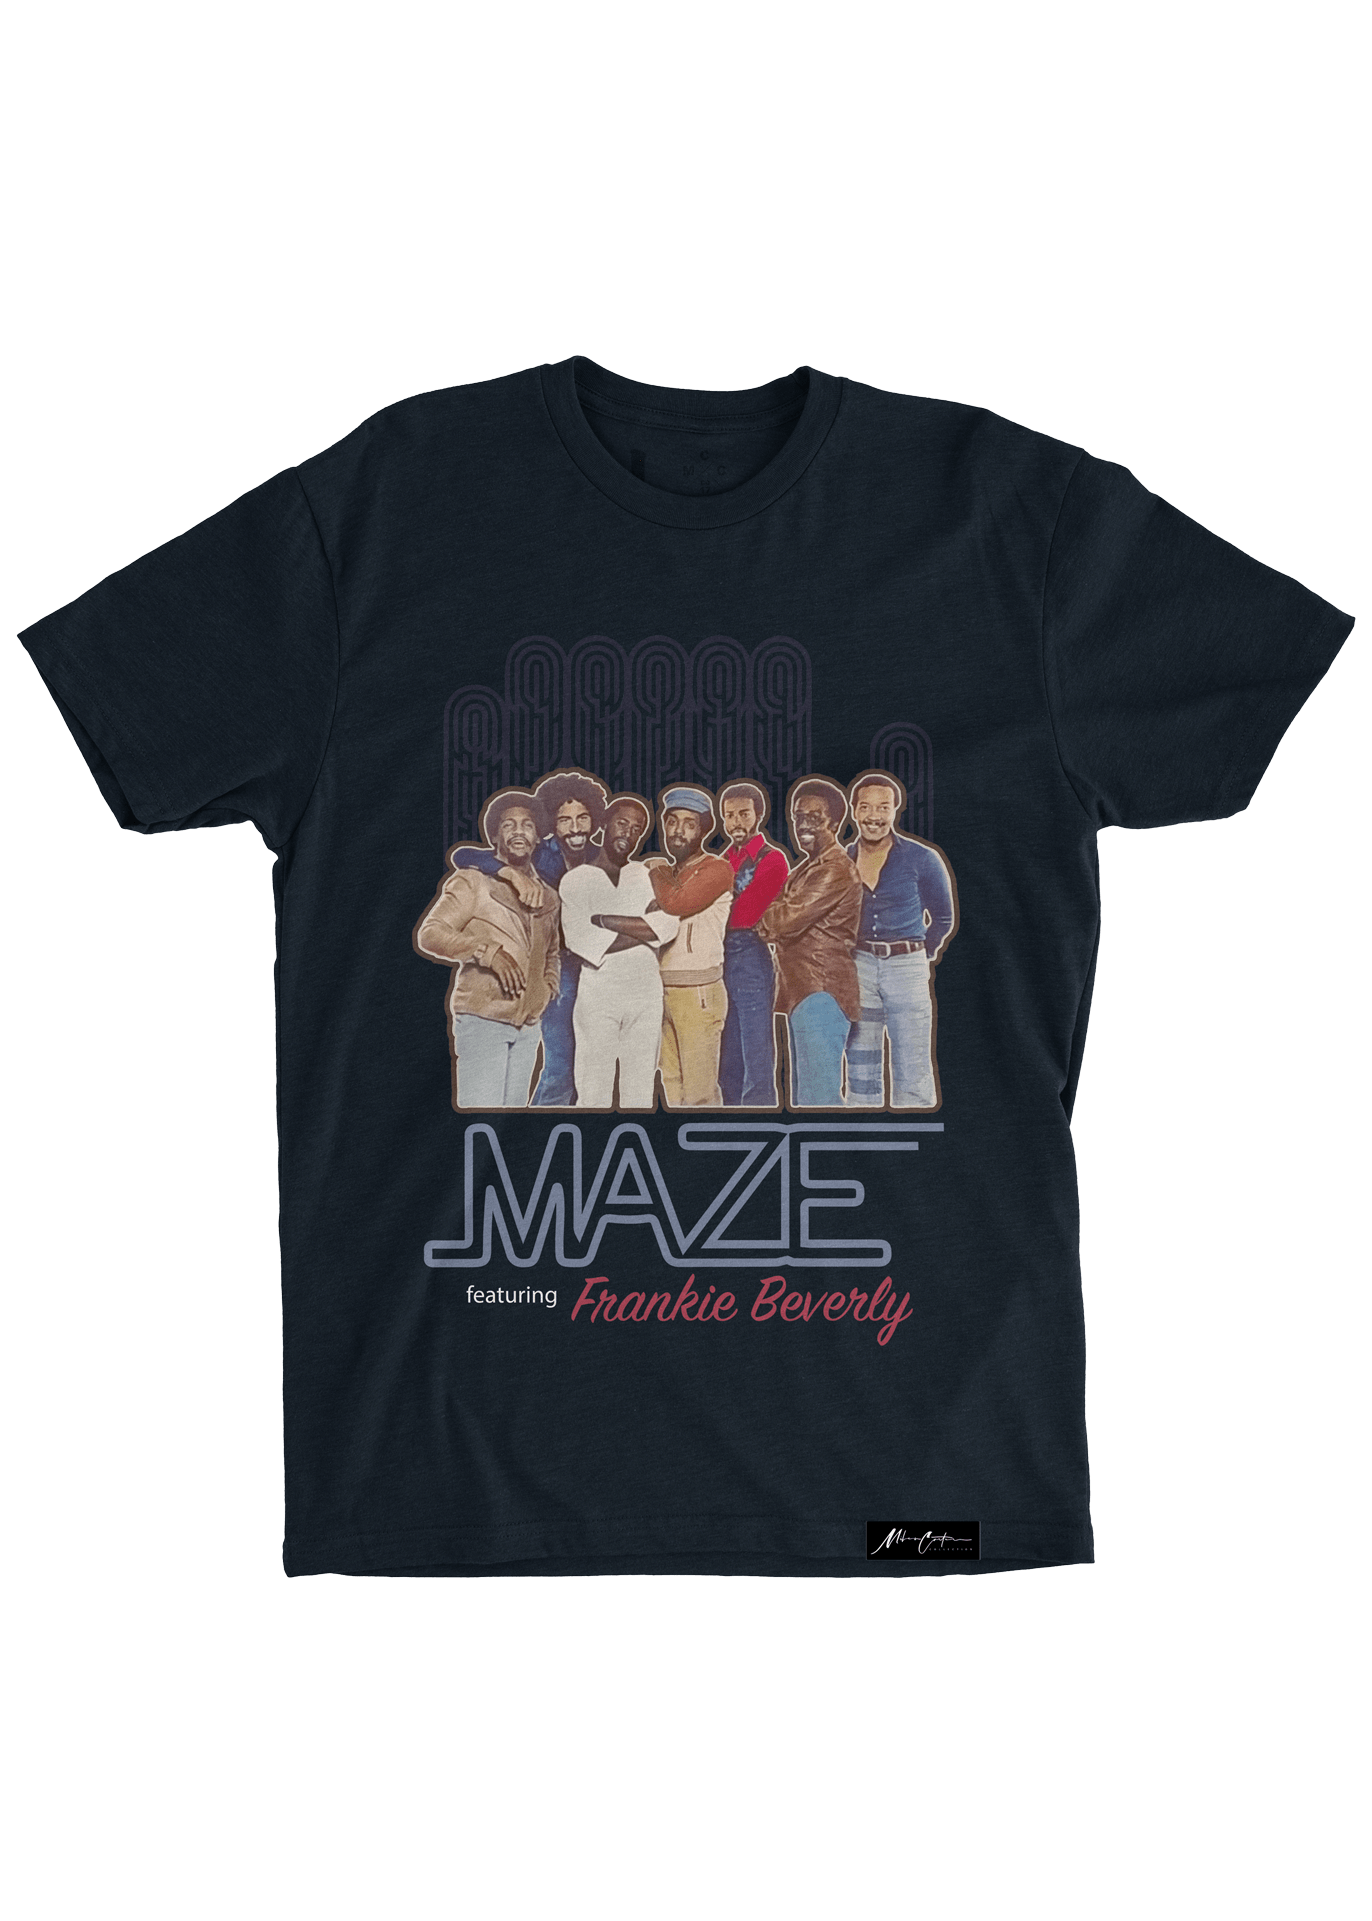 Miles Carter Designs Shirt S Back In Stride - Maze ft  FB